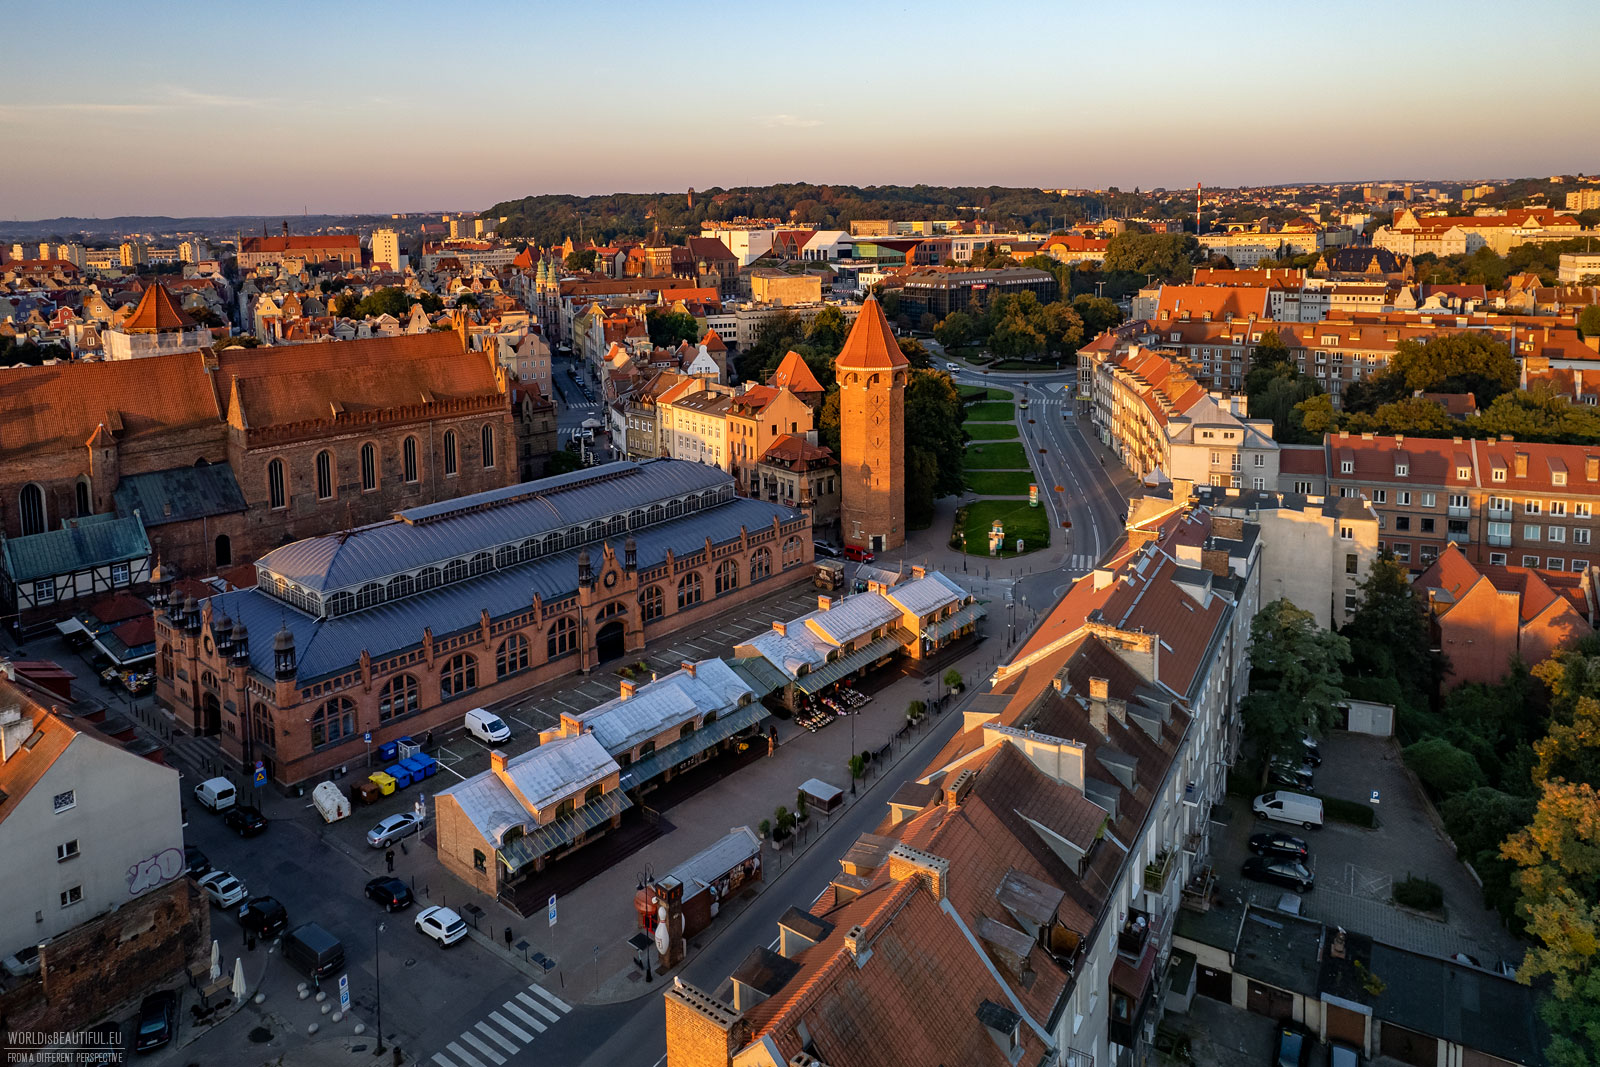 Dominican Market Hall in Gdańsk